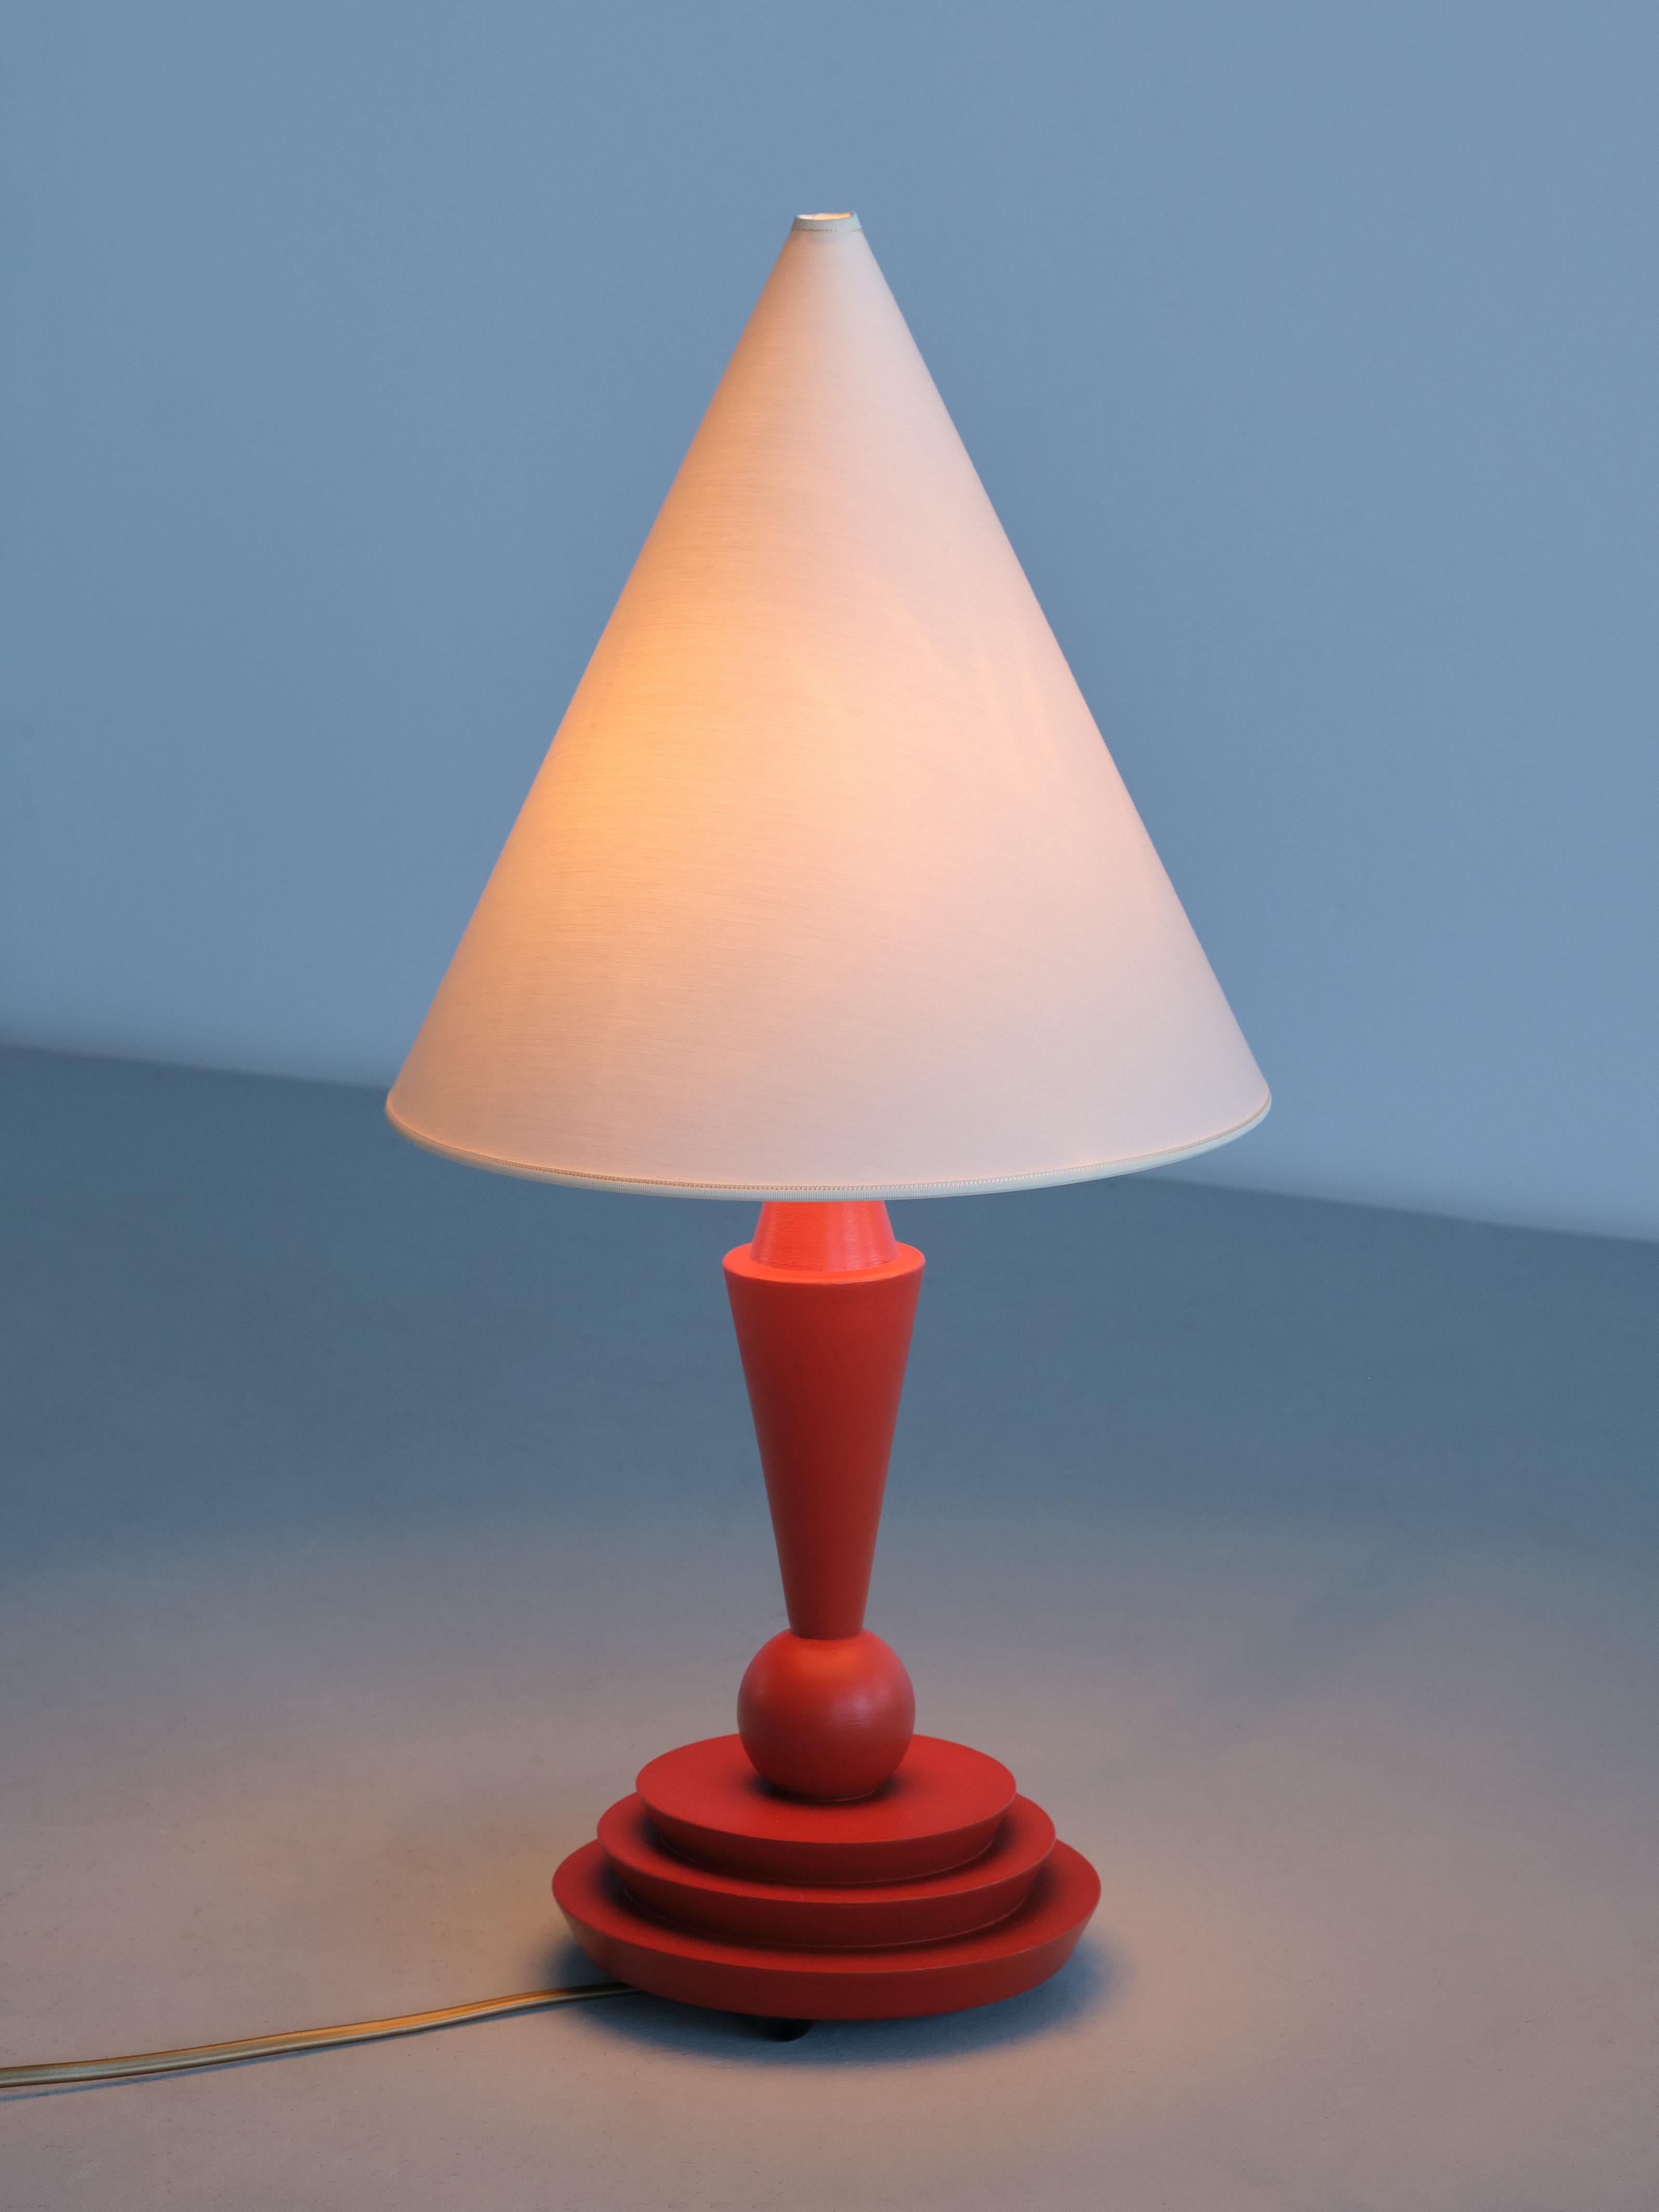 Austrian Art Deco Table Lamp in Vermilion Orange Lacquered Beech Wood, Austria, 1930s For Sale